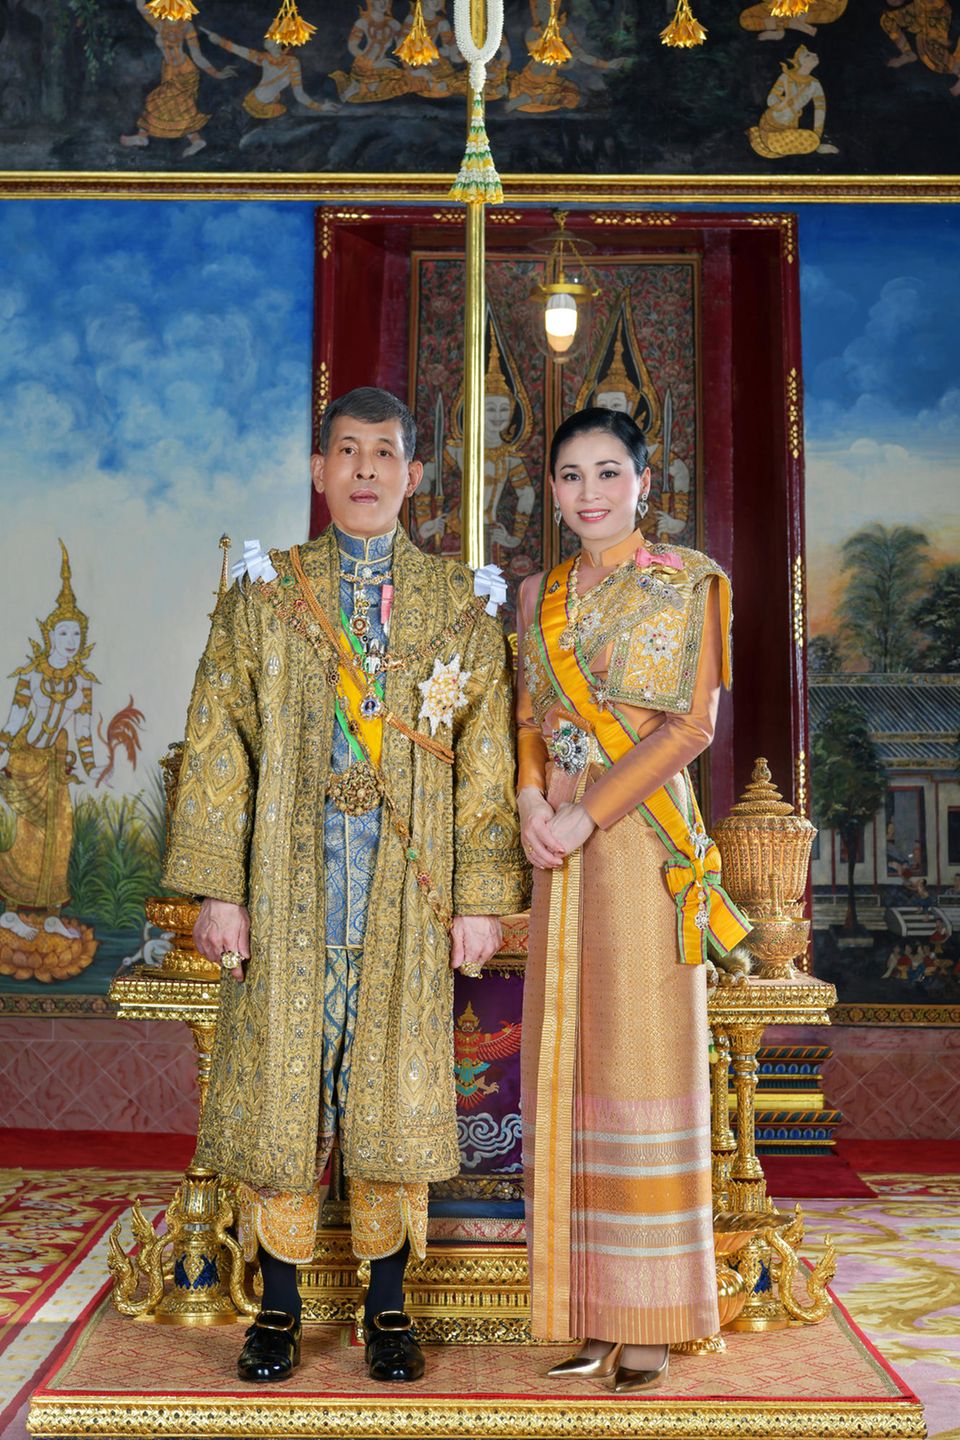 20. Mai 2019  Gut zwei Wochen nach der Krönung von König Maha Vajiralongkorn gibt das Bureau of the Royal Household offizielle Fotos des neuen Königspaars heraus.